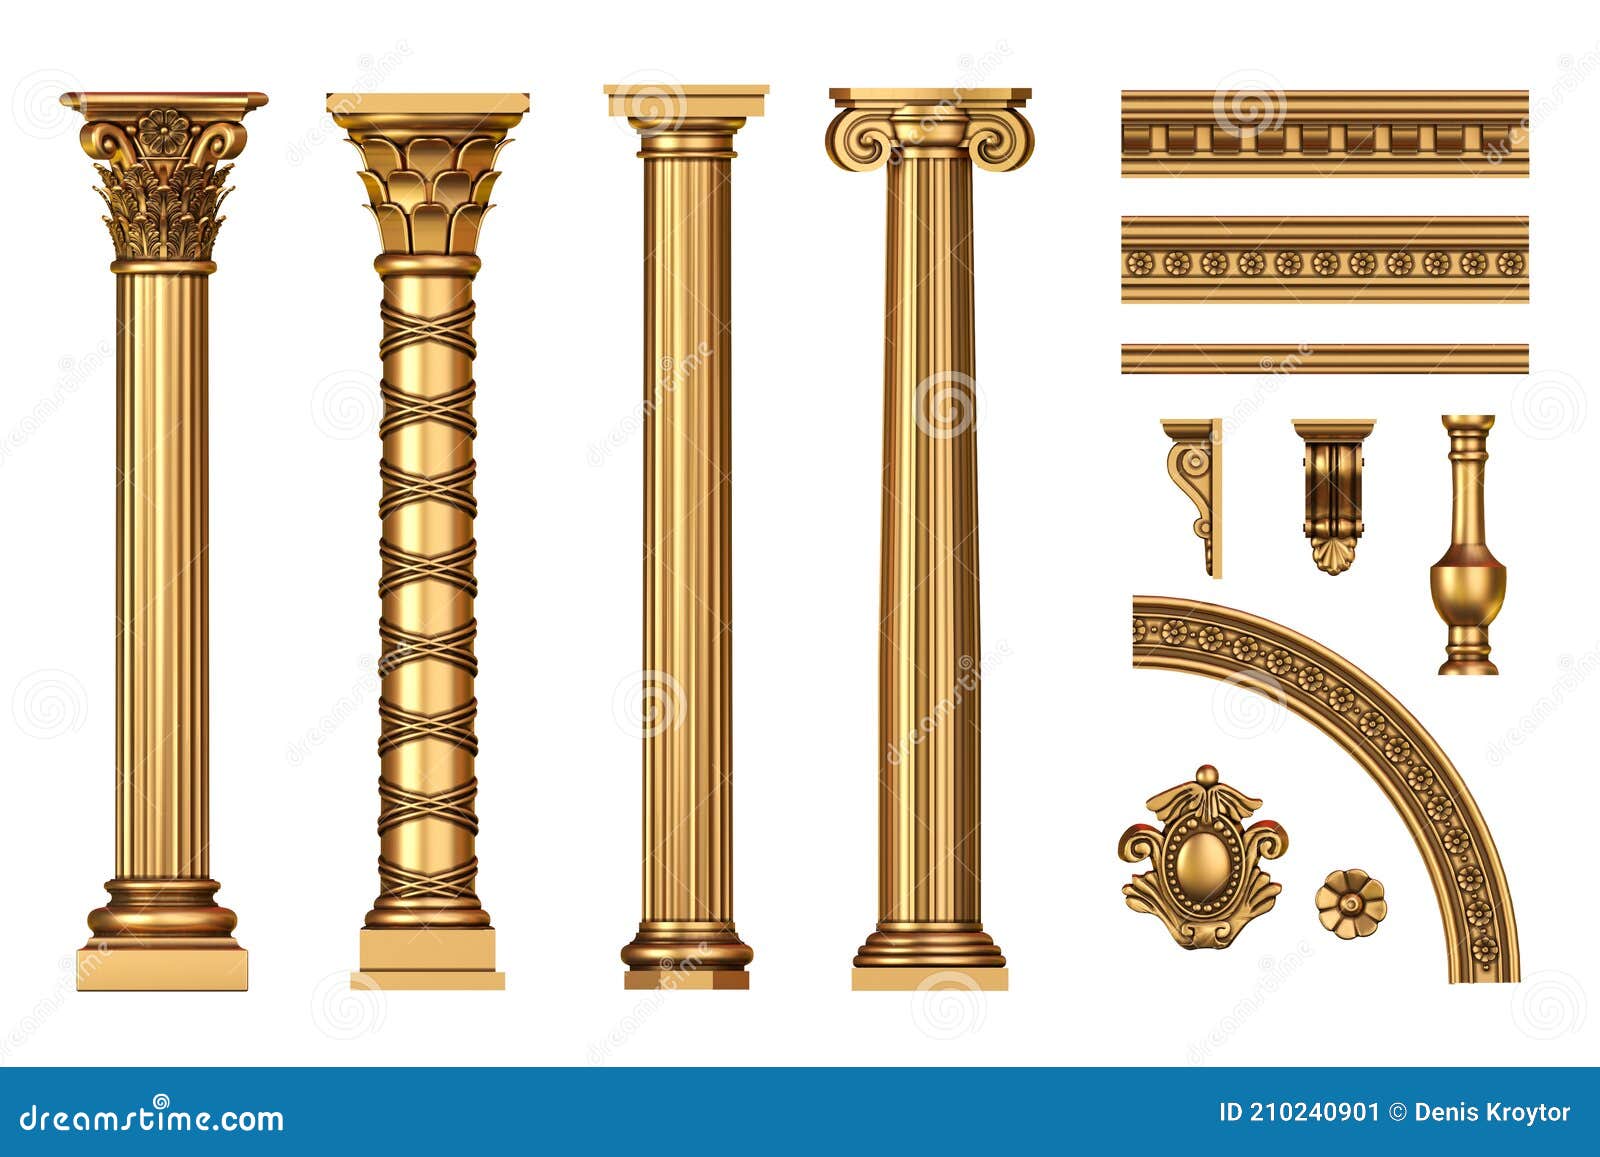 classic antique golden columns set